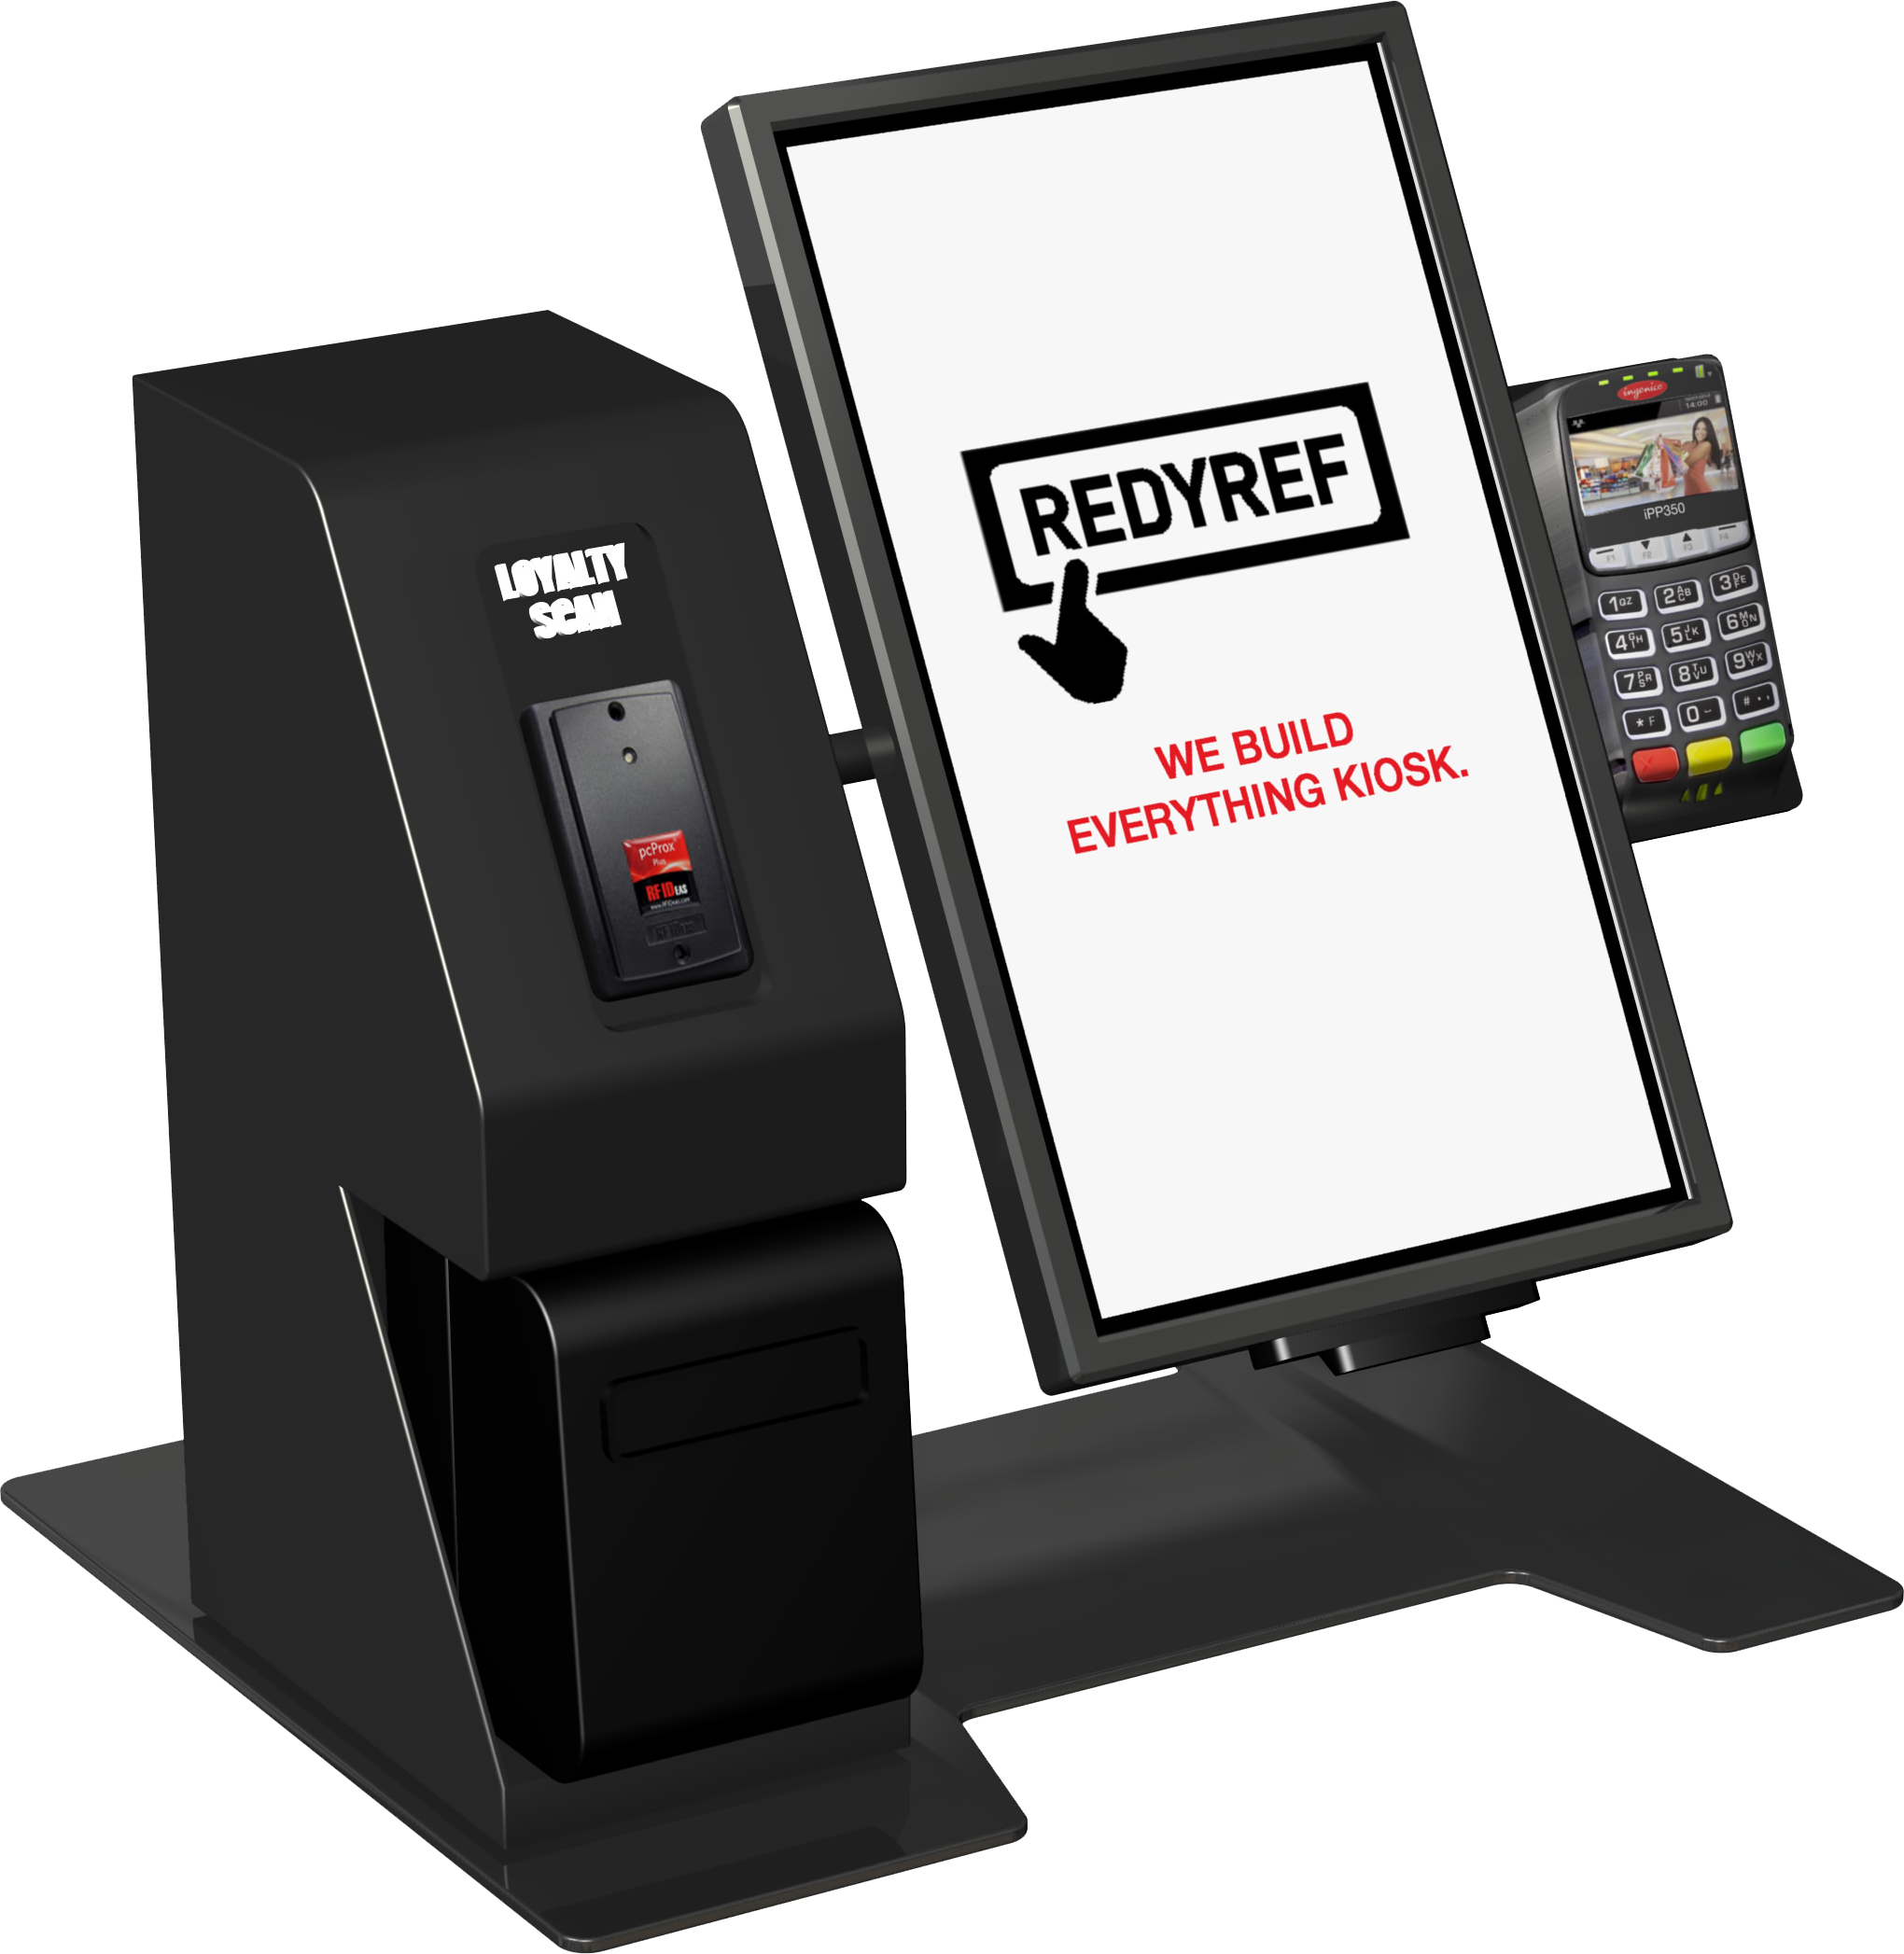 REDYREF Prodigy-C Countertop Payment Kiosk